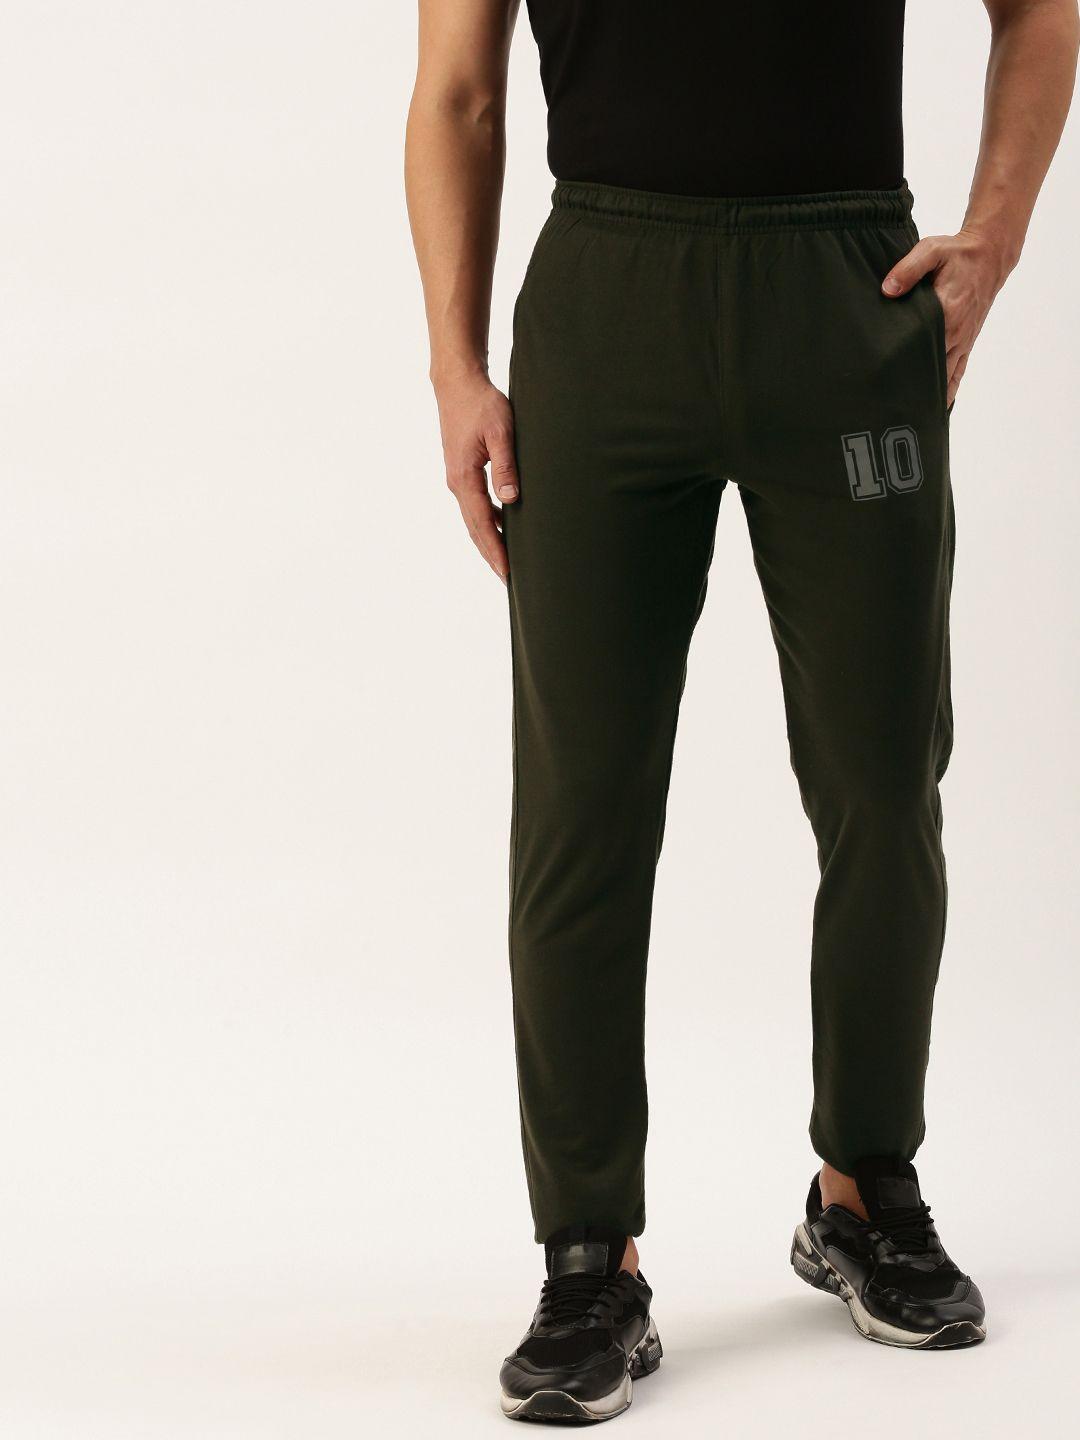 sports52 wear men printed slim fit training track pants